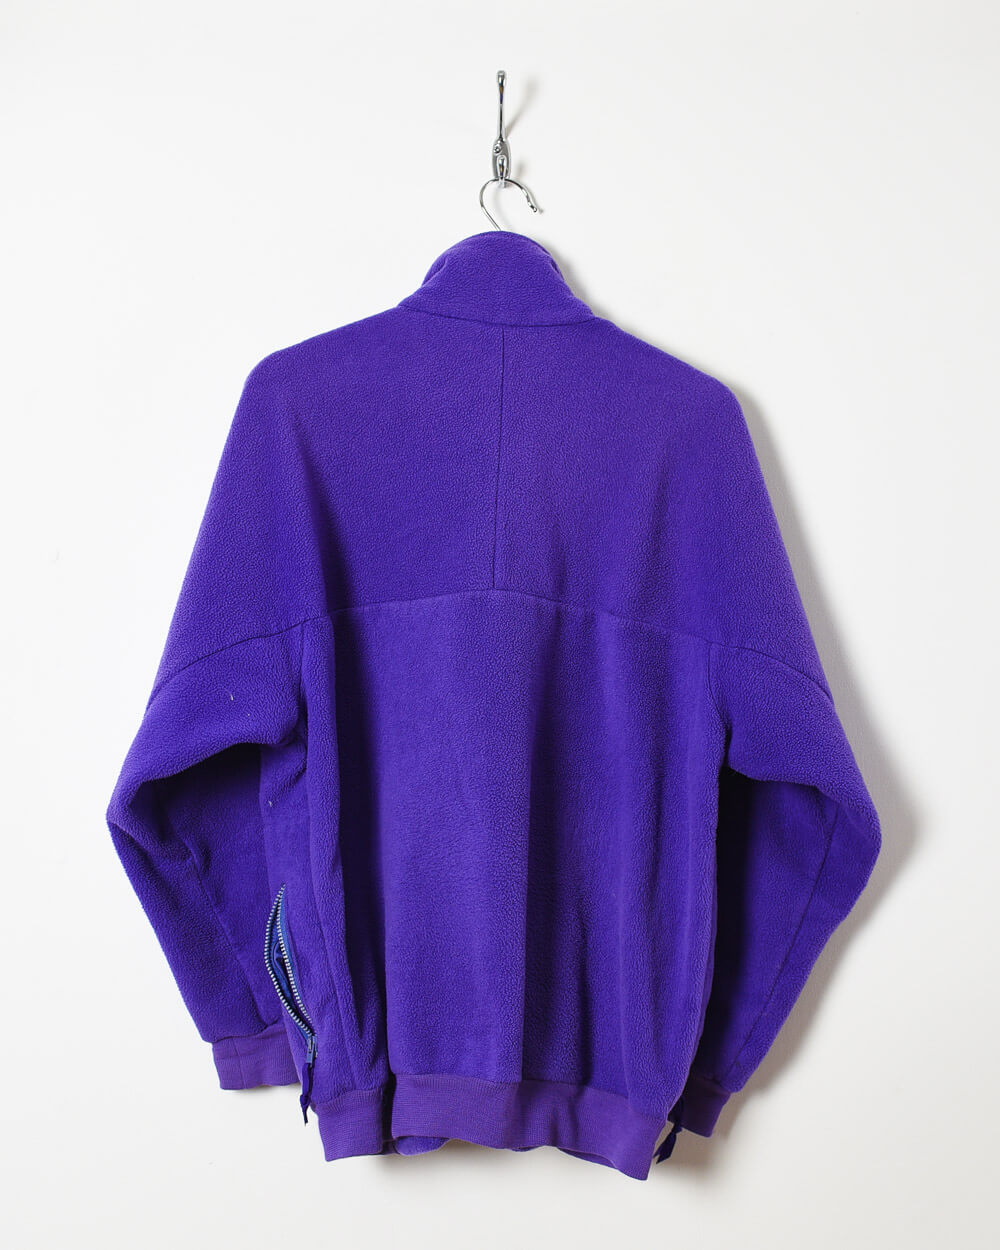 Purple Berghaus Zip-Through Fleece - Medium